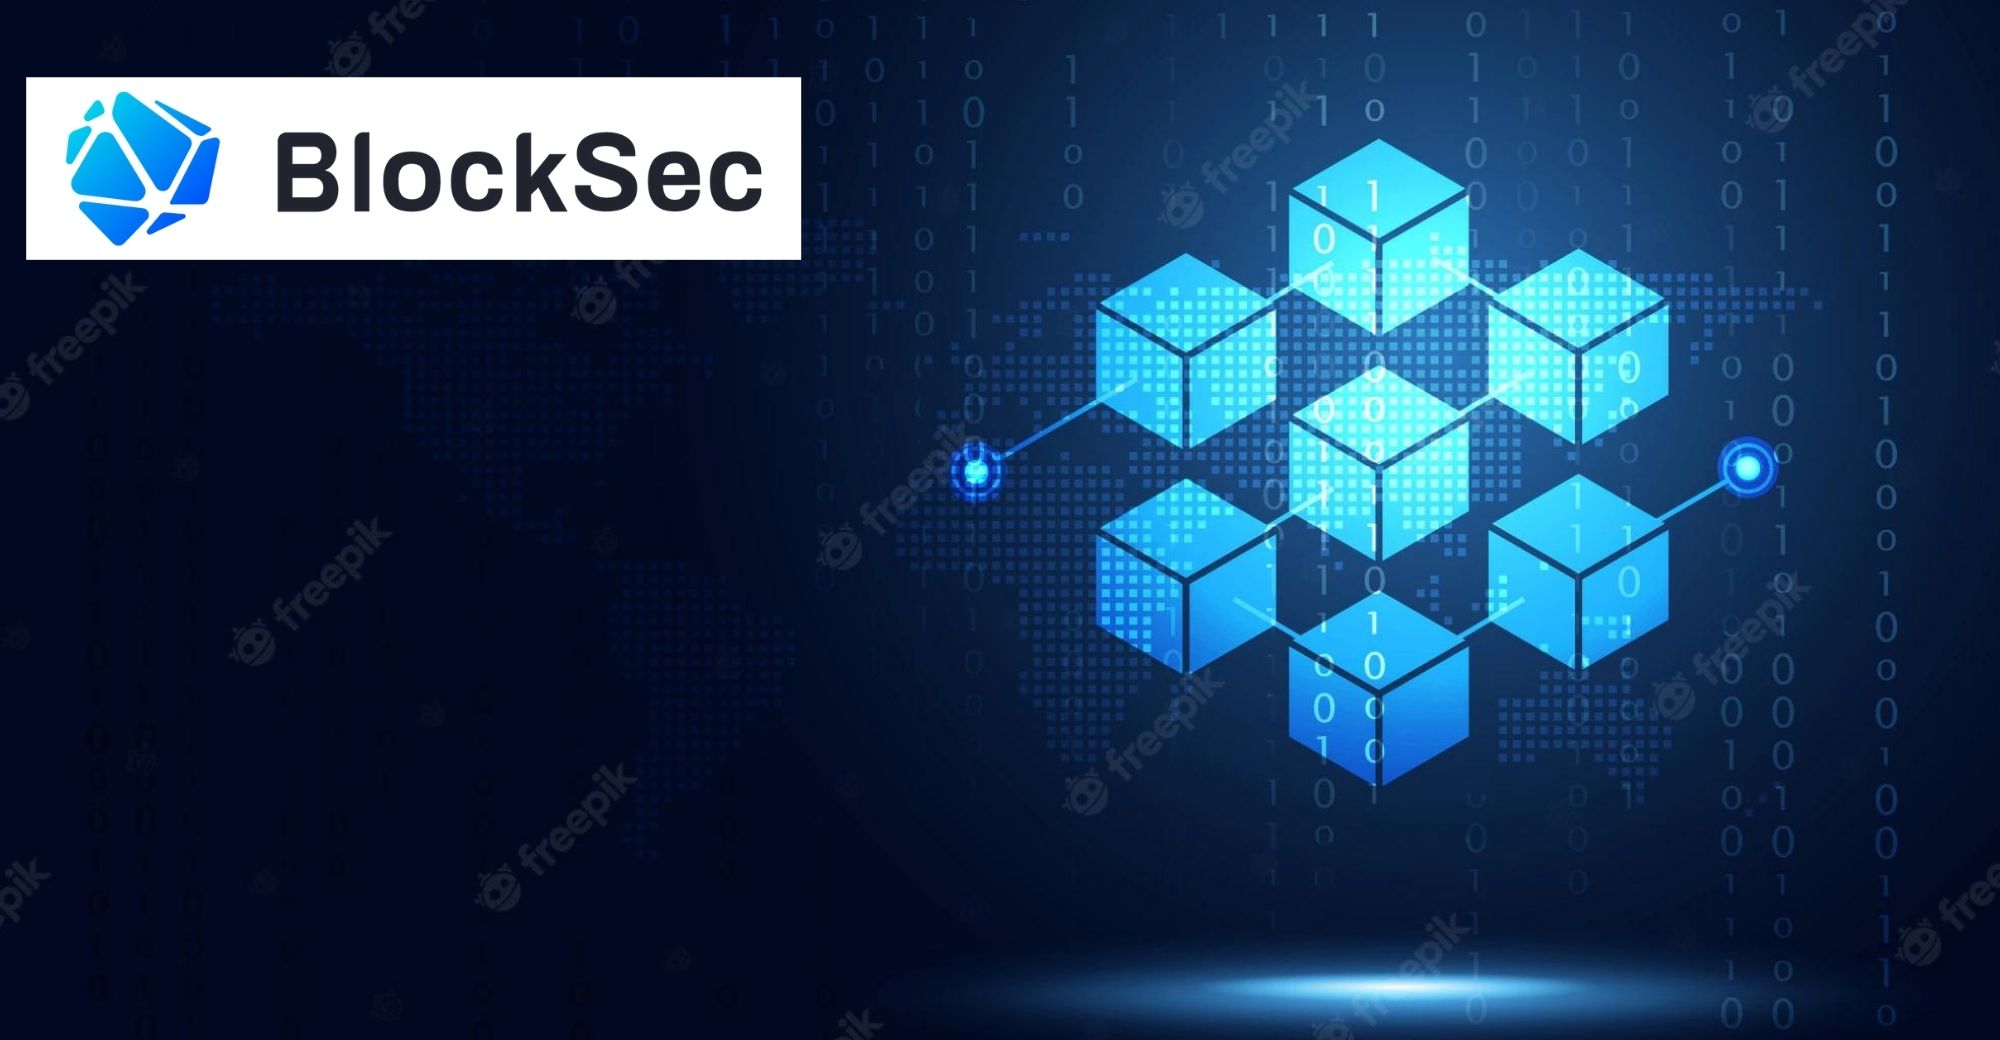 Blockchain Architecture การรักษาความปลอดภัยองค์กร Blocksec เสร็จสิ้นเทวดา + รอบการจัดหาเงินทุน